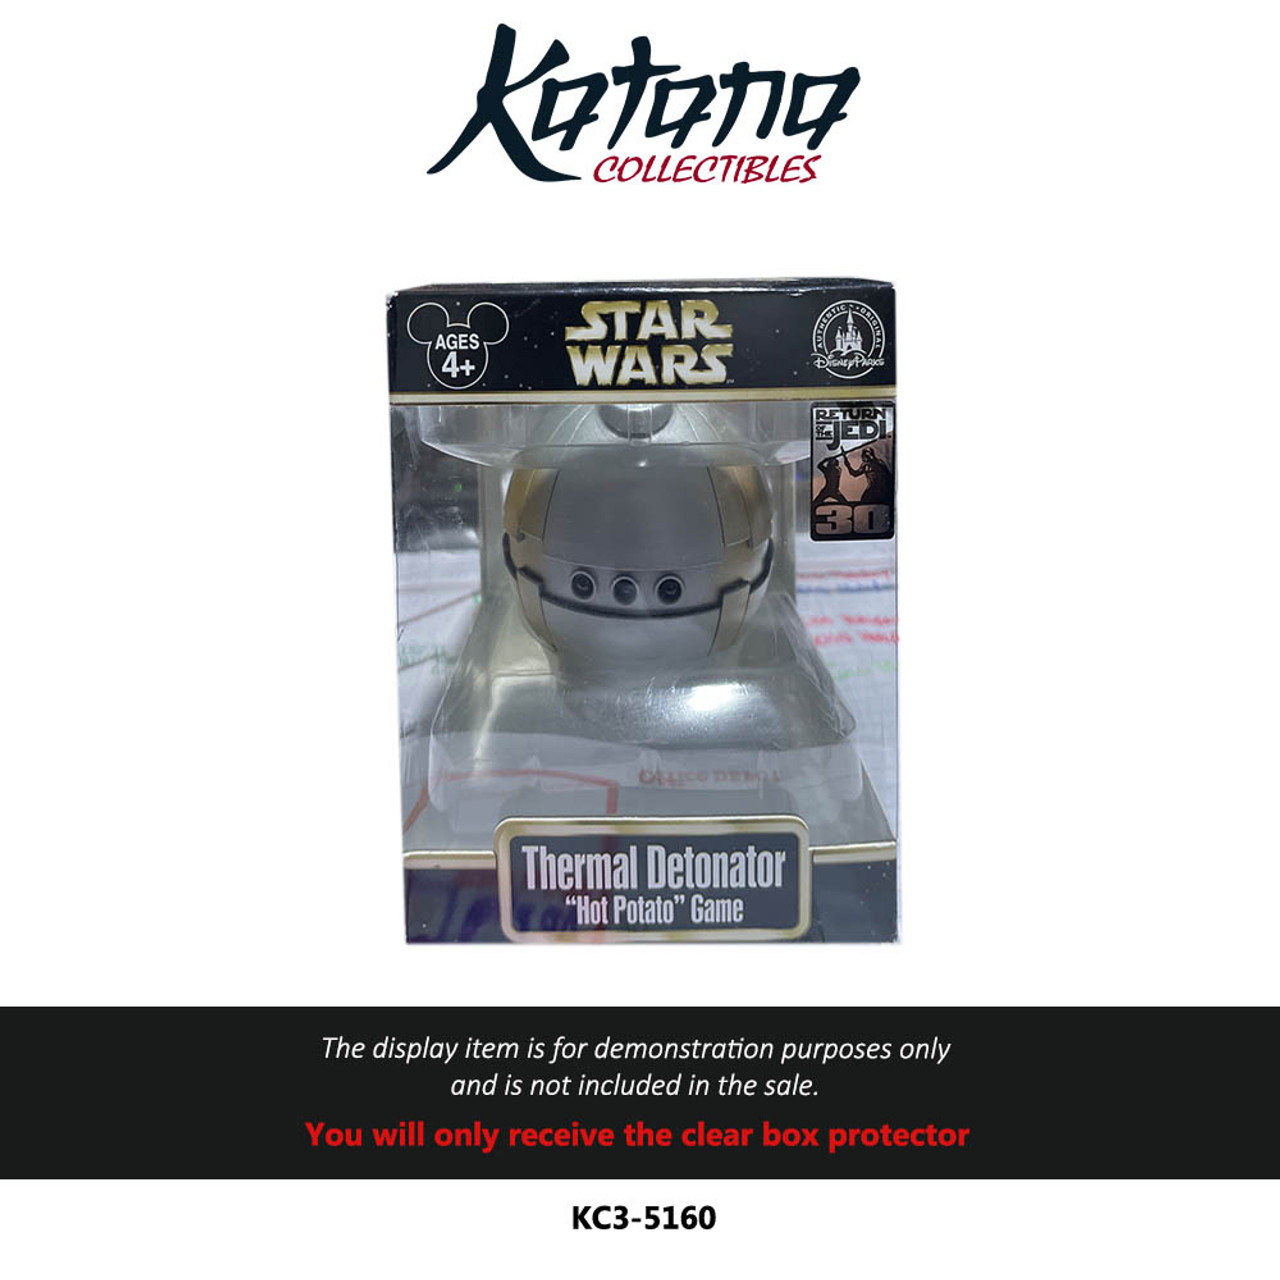 Katana Collectibles Protector For Thermal Detonator Hot Potato Game